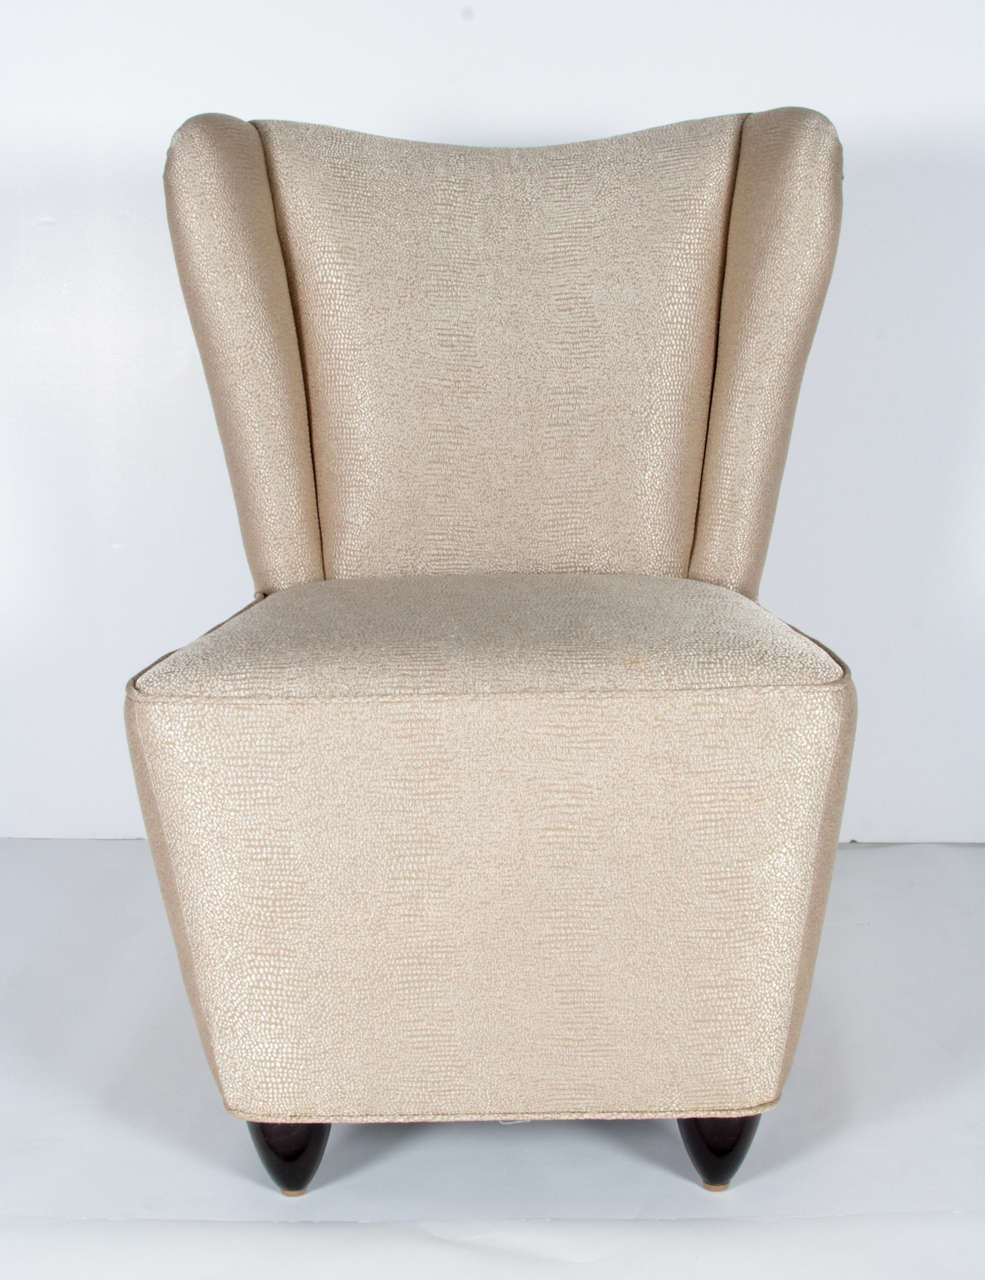 Wood Gio Ponti (Attr) Chairs